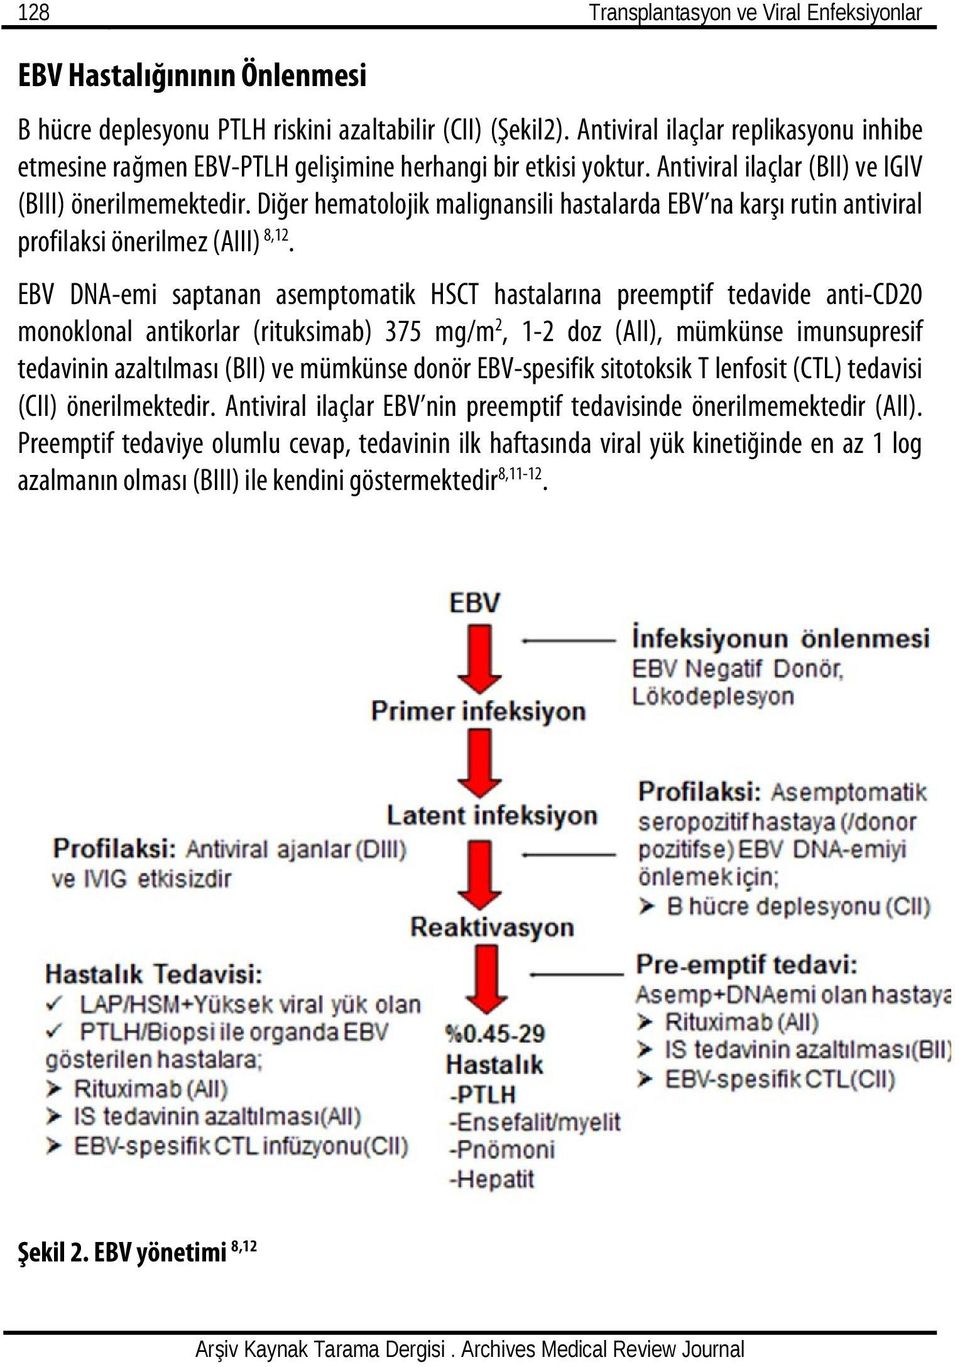 Diğer hematolojik malignansili hastalarda EBV na karşı rutin antiviral profilaksi önerilmez (AIII) 8,12.